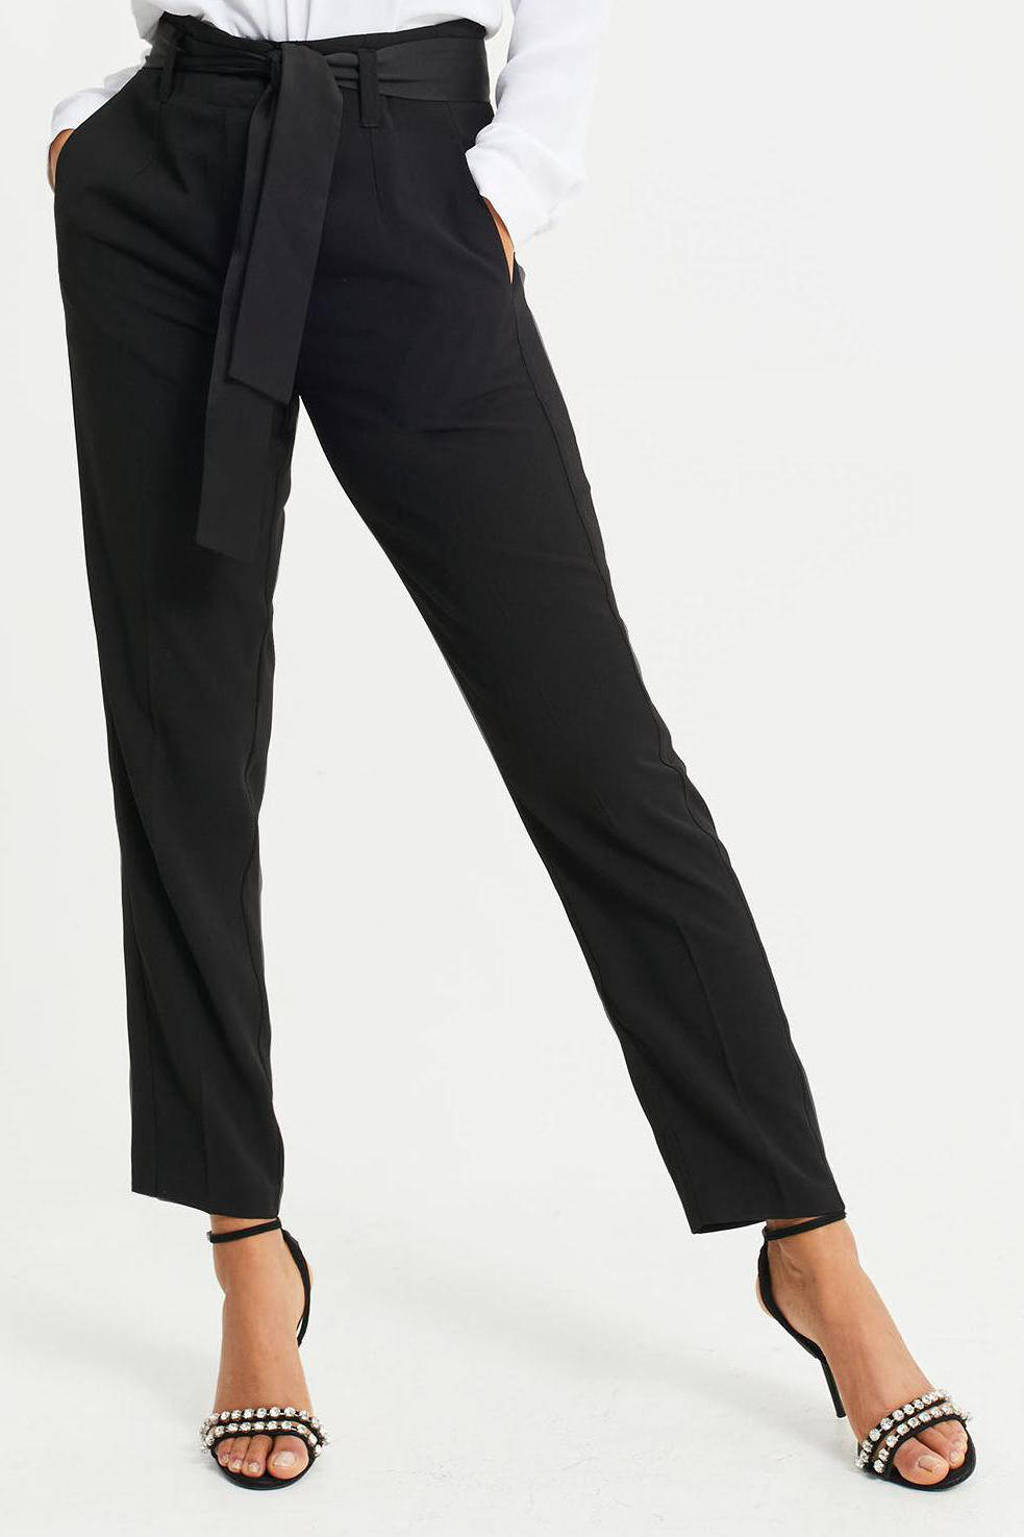 Arbitrage Afhankelijk Horzel WE Fashion high waist tapered fit pantalon zwart | wehkamp